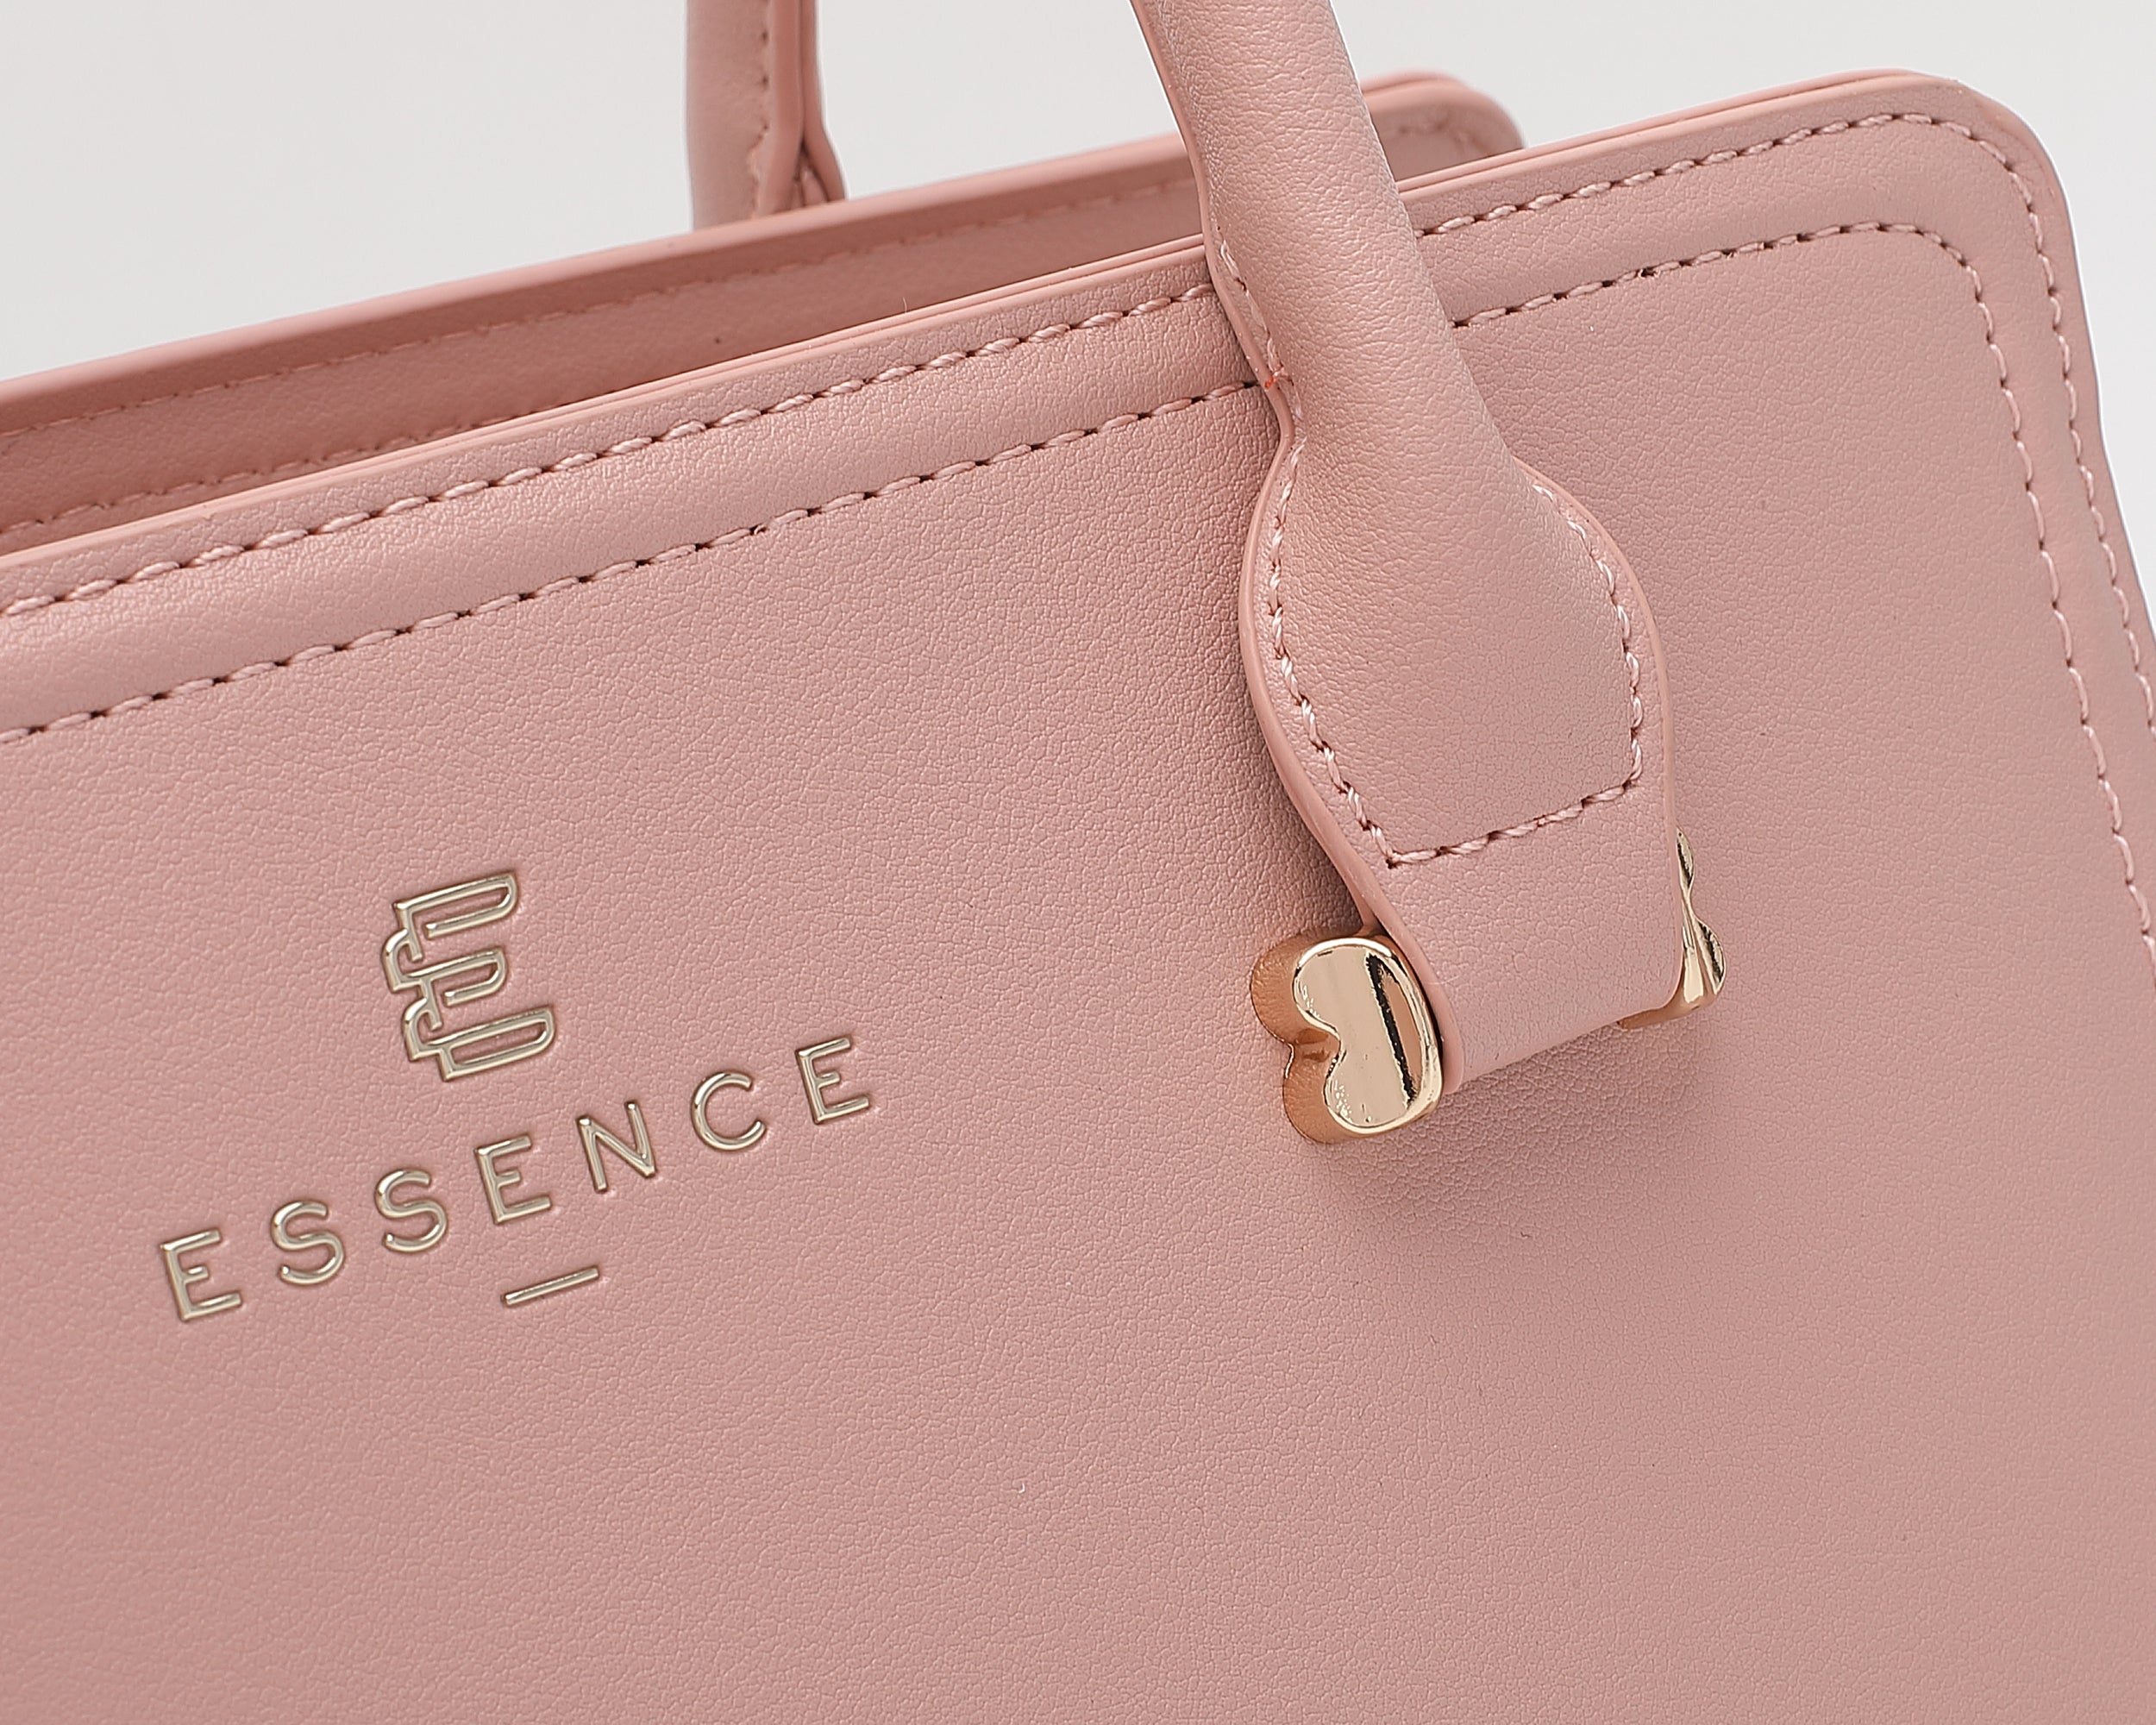 Lost Your Chance Handbag - Hot Pink | Fashion Nova, Handbags | Fashion Nova